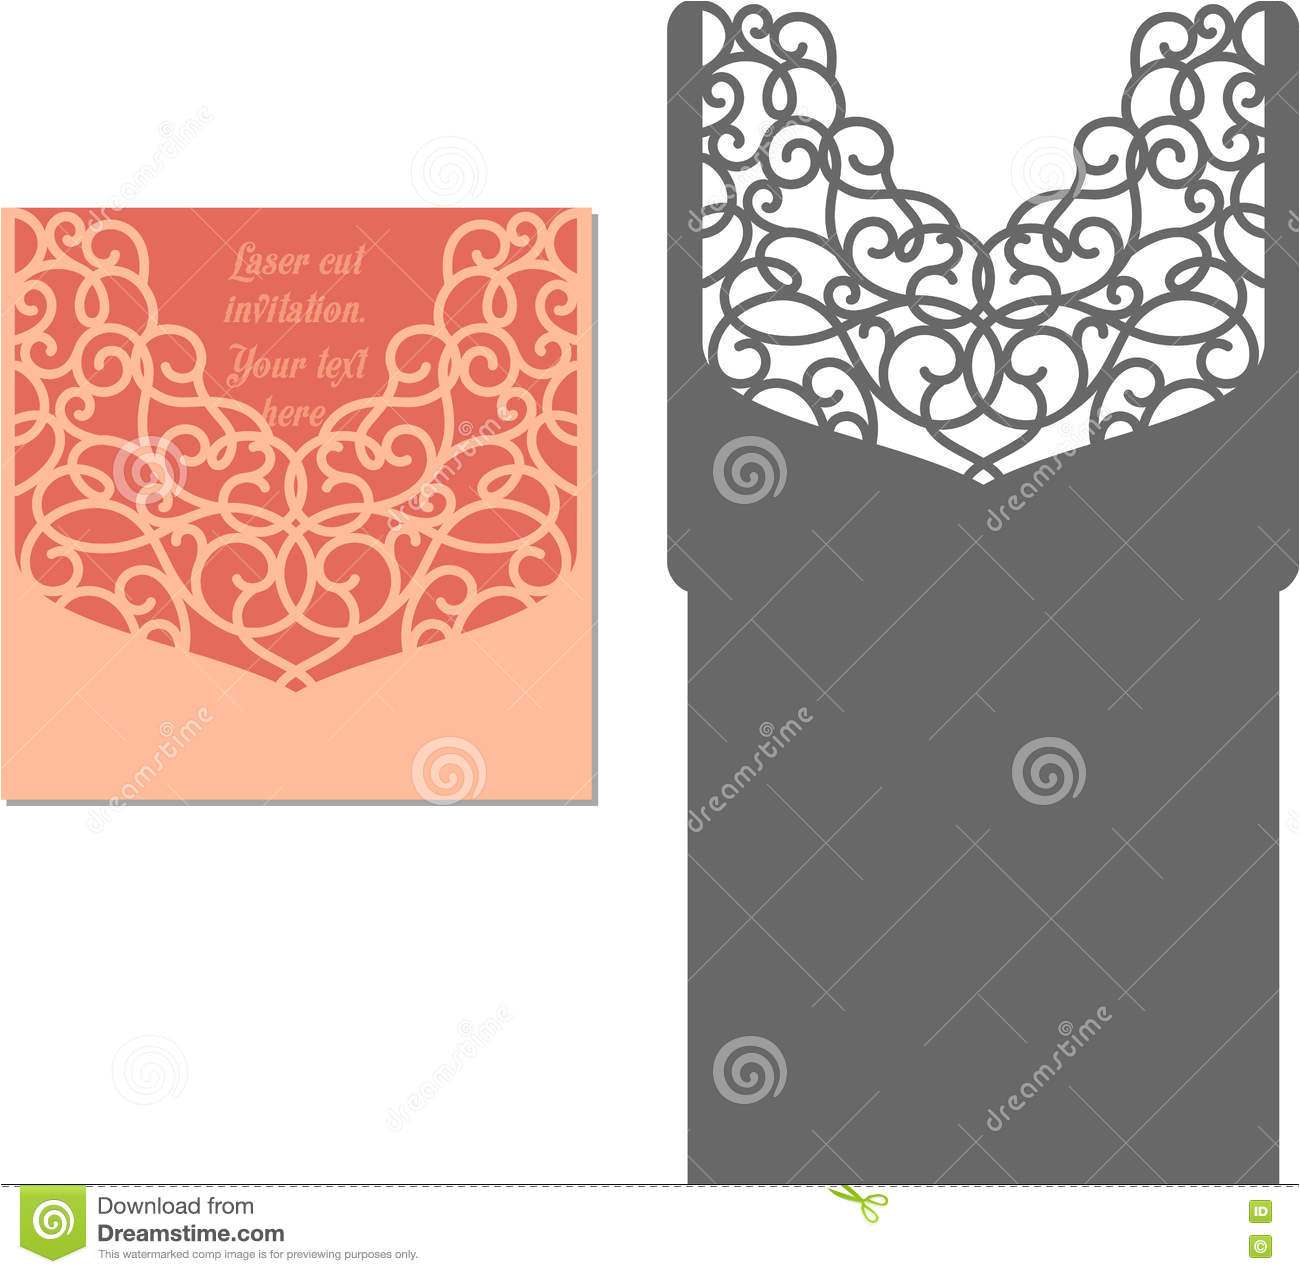 stock illustration laser cut envelope template invitation wedding card cutting pattern image72590418